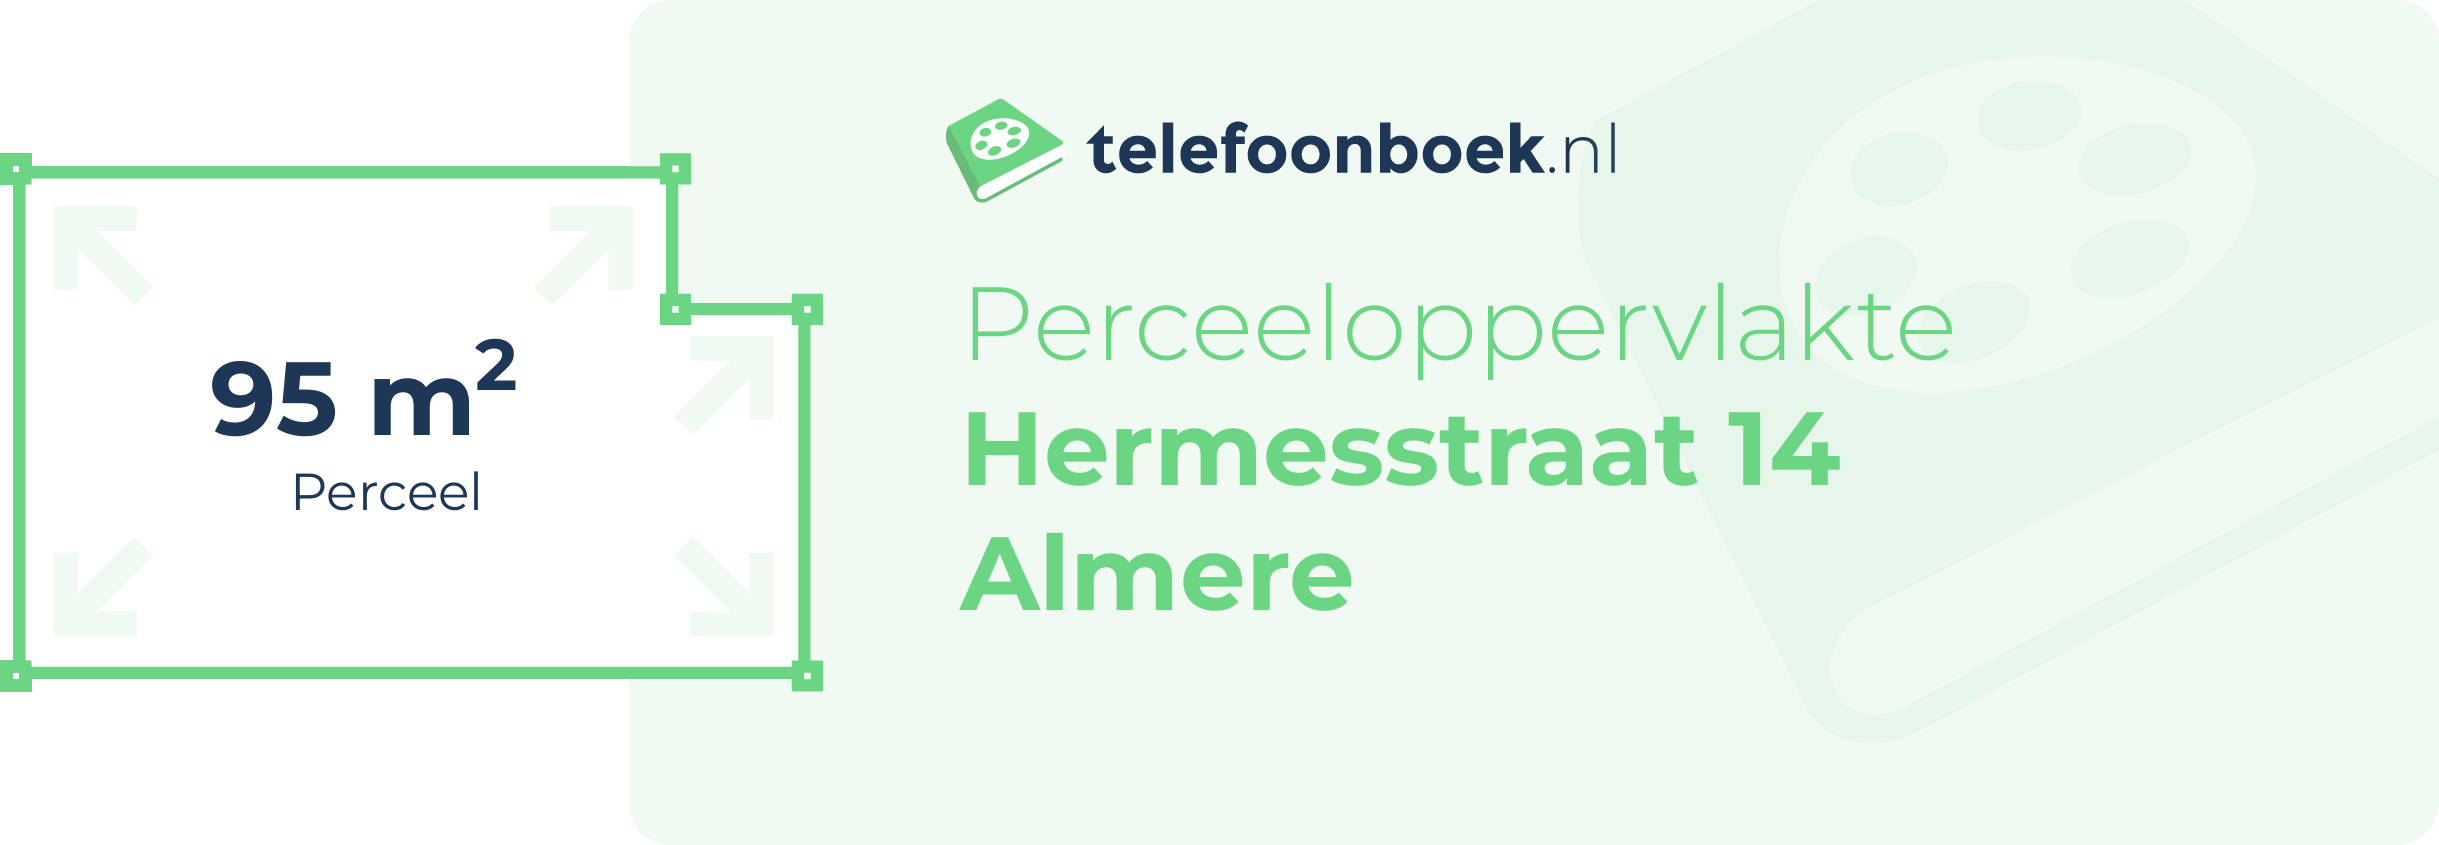 Perceeloppervlakte Hermesstraat 14 Almere